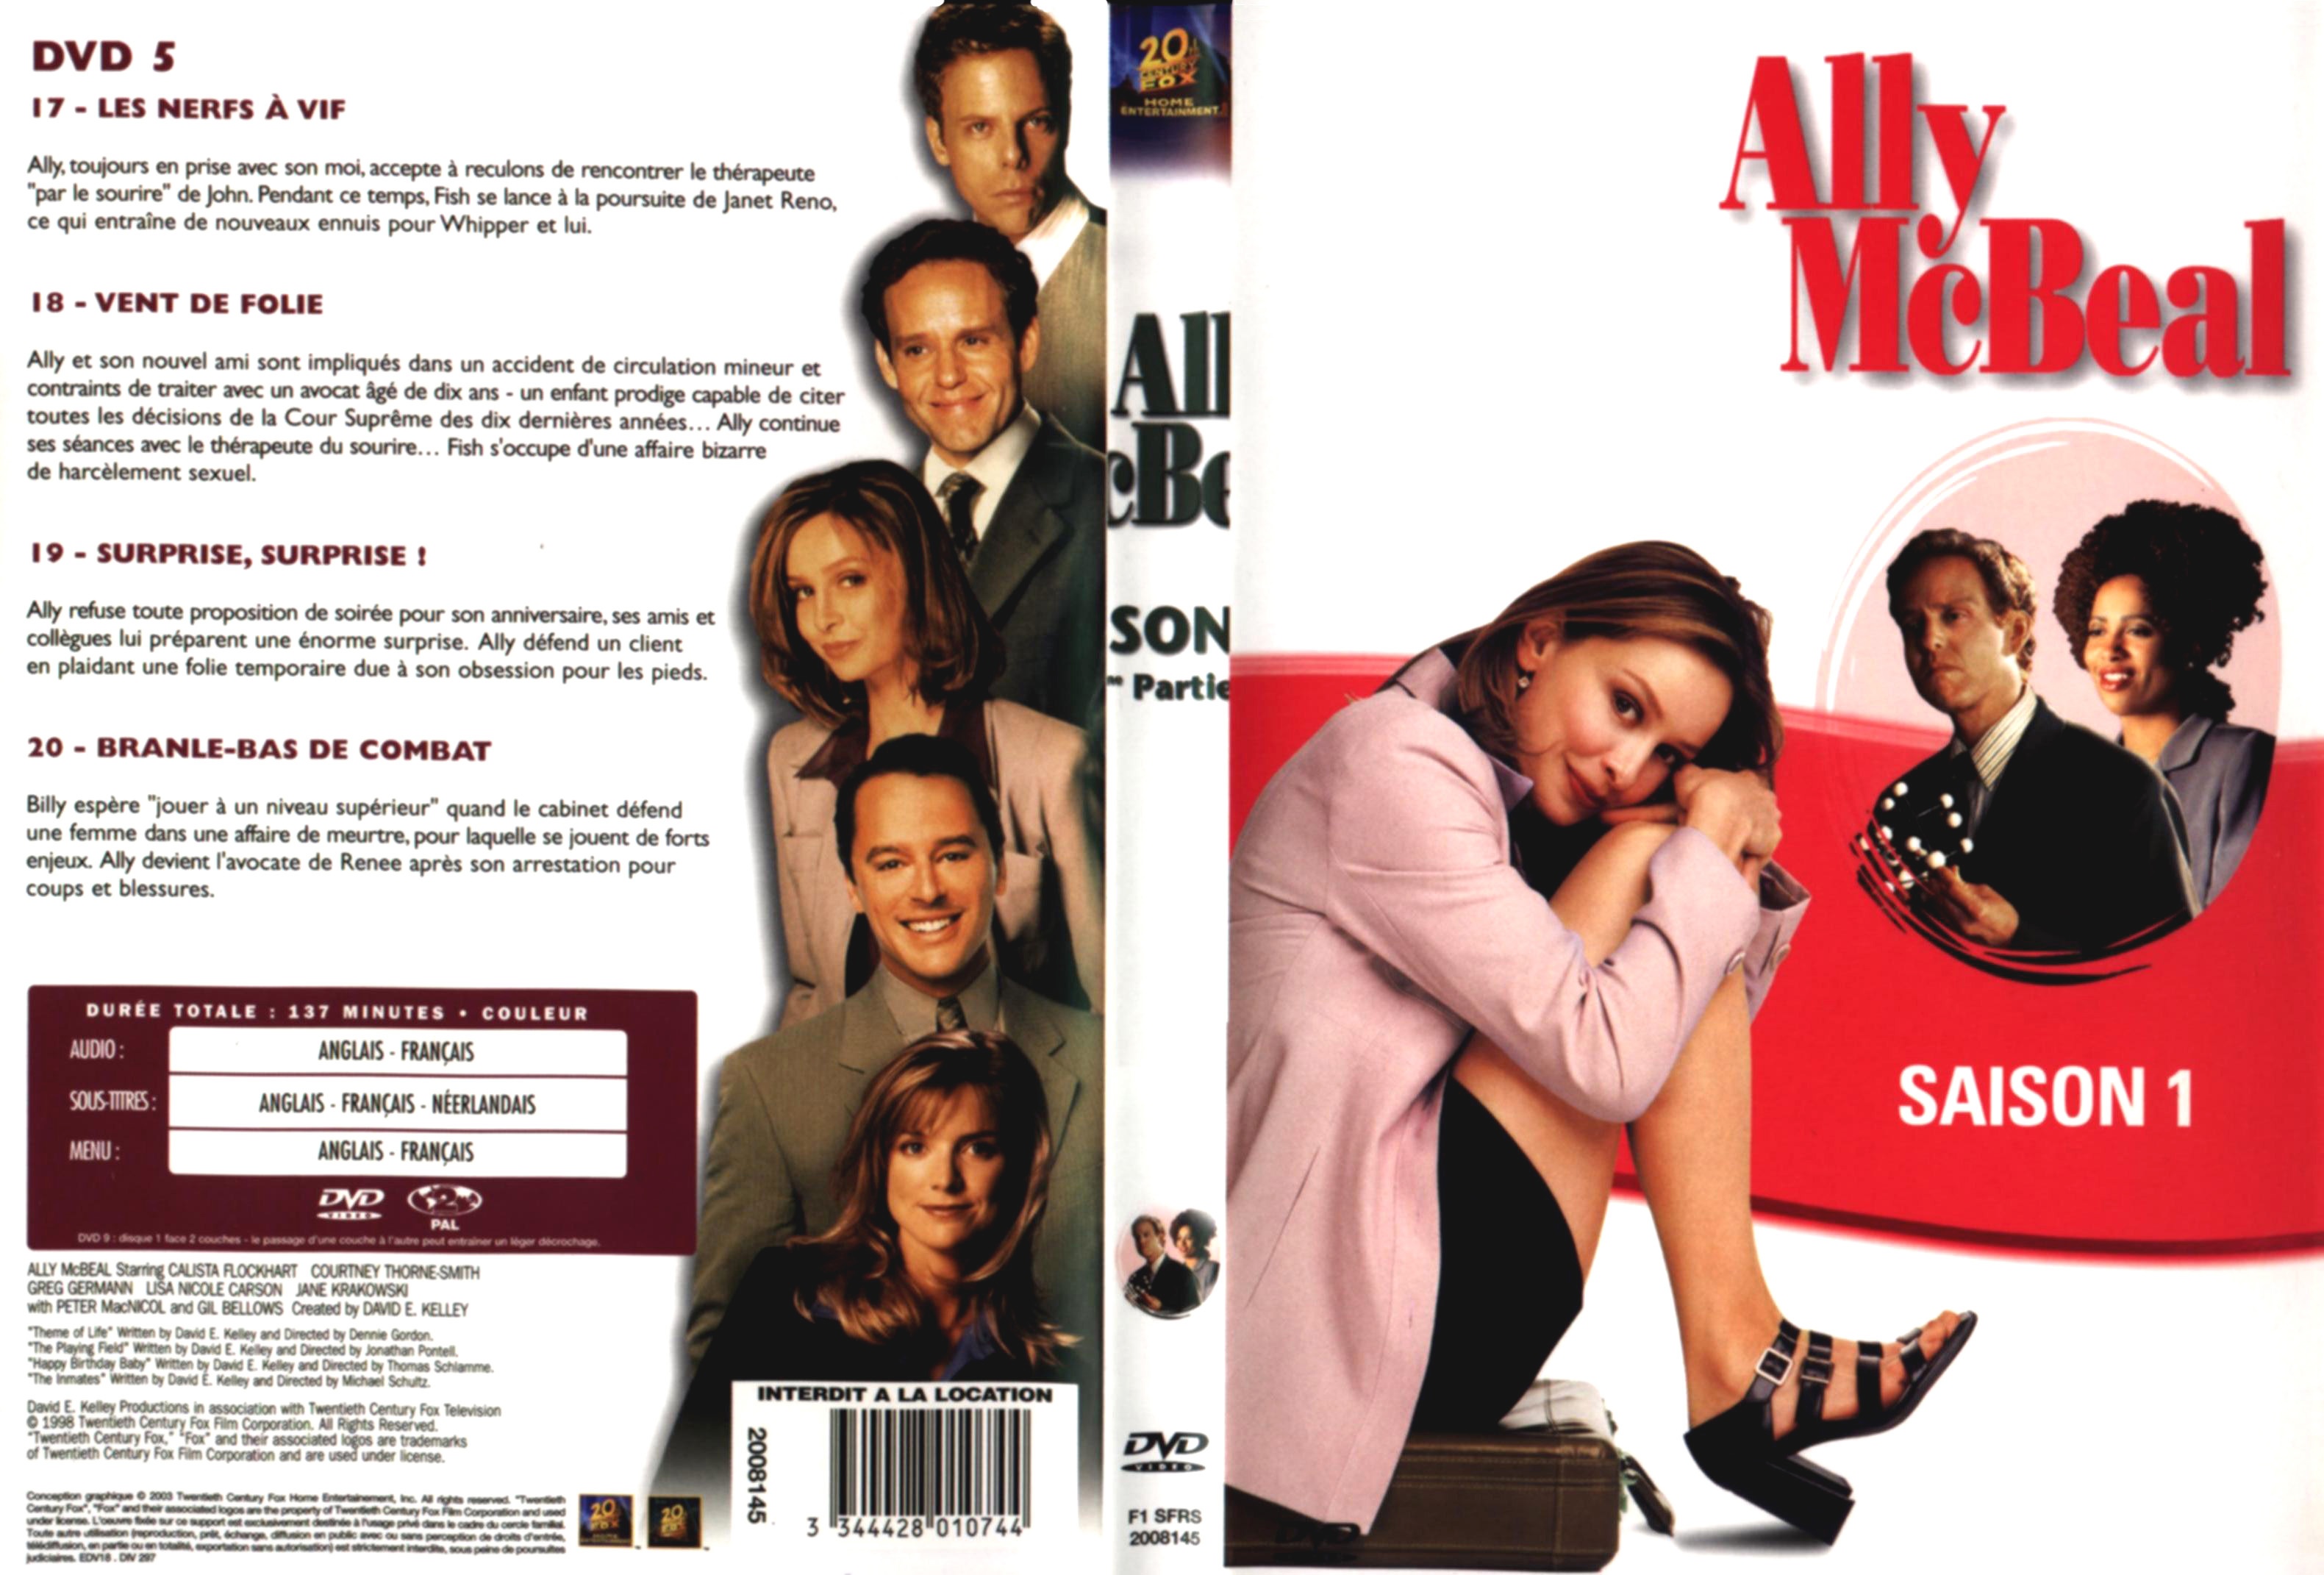 Jaquette DVD Ally McBeal Saison 1 DVD 5